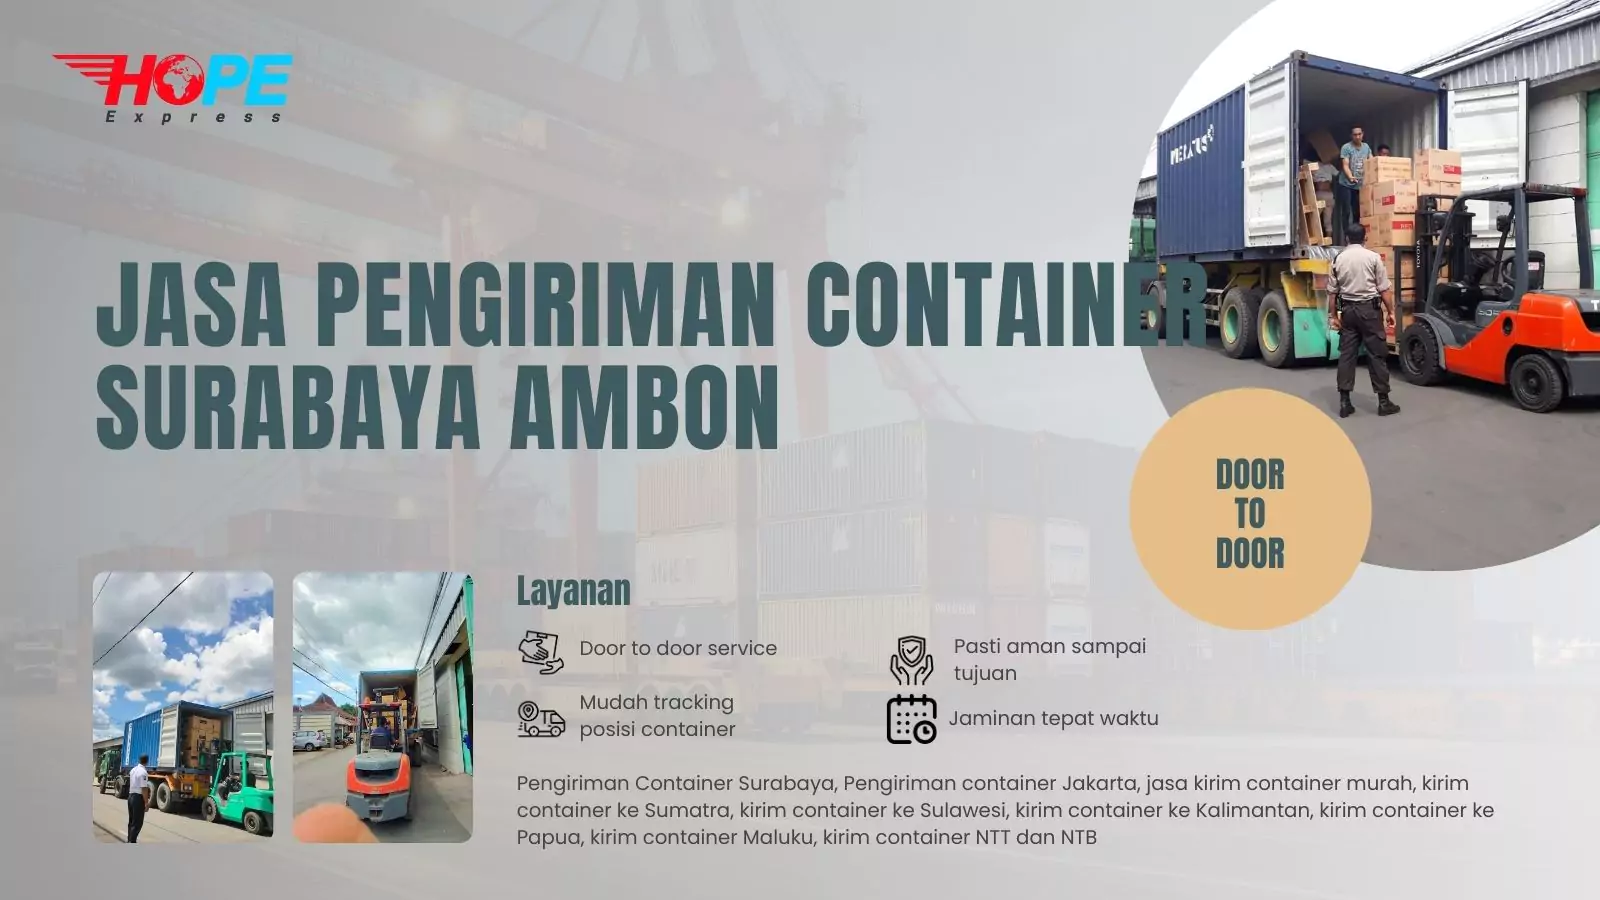 Jasa Pengiriman Container Surabaya Ambon